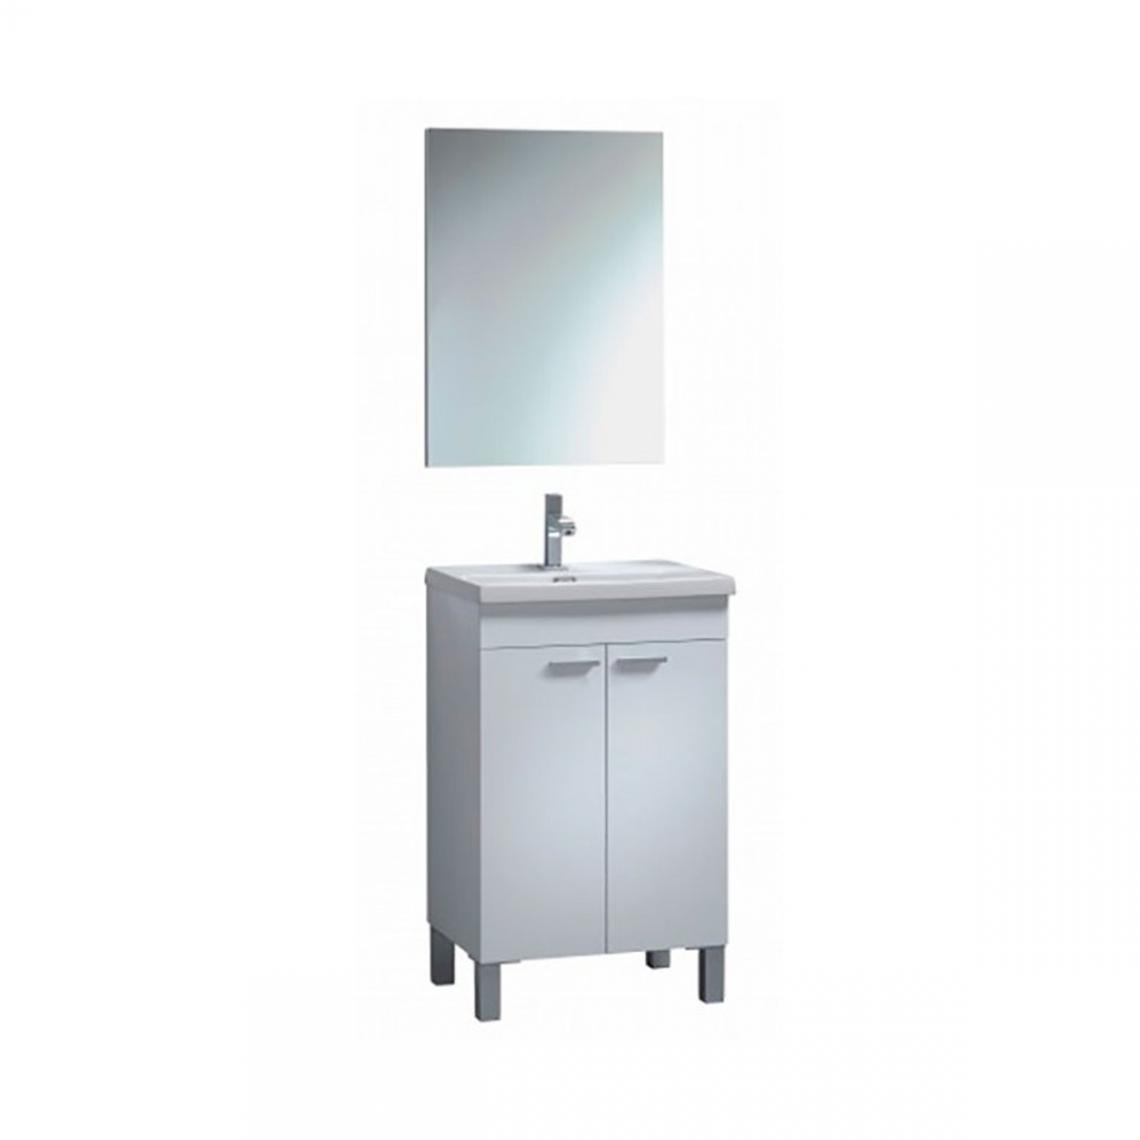 Pegane - Meuble sous-vasque Suspendue avec 2 portes + miroir coloris blanc laqué brillant - 64 x 80 x 45 cm -PEGANE- - Vasque